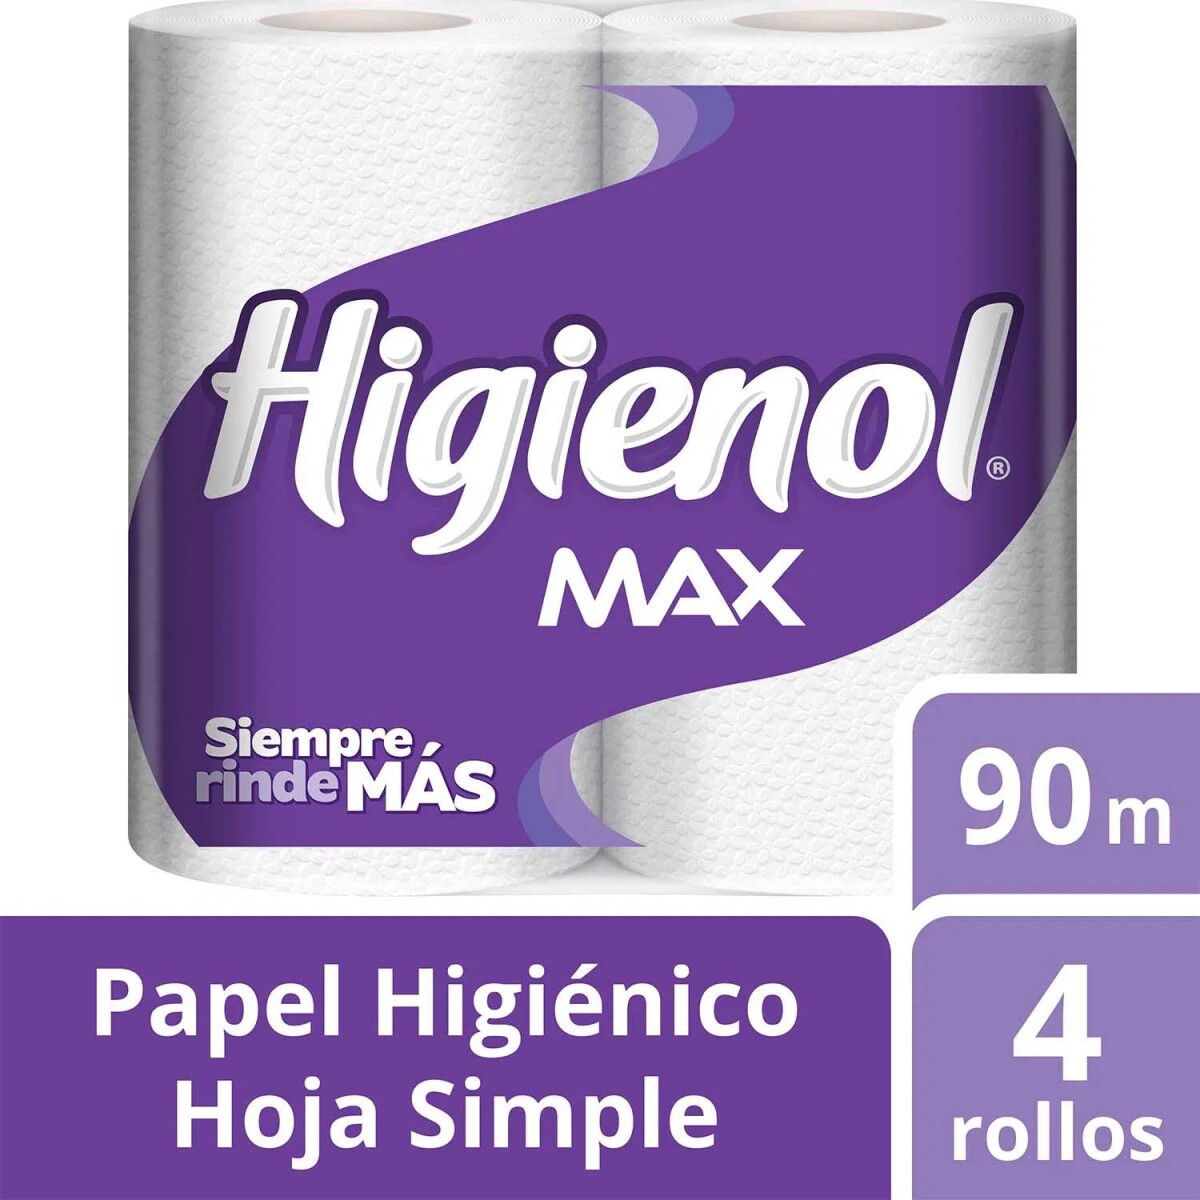 Higienol Papel Higiénico Max 90m X4 